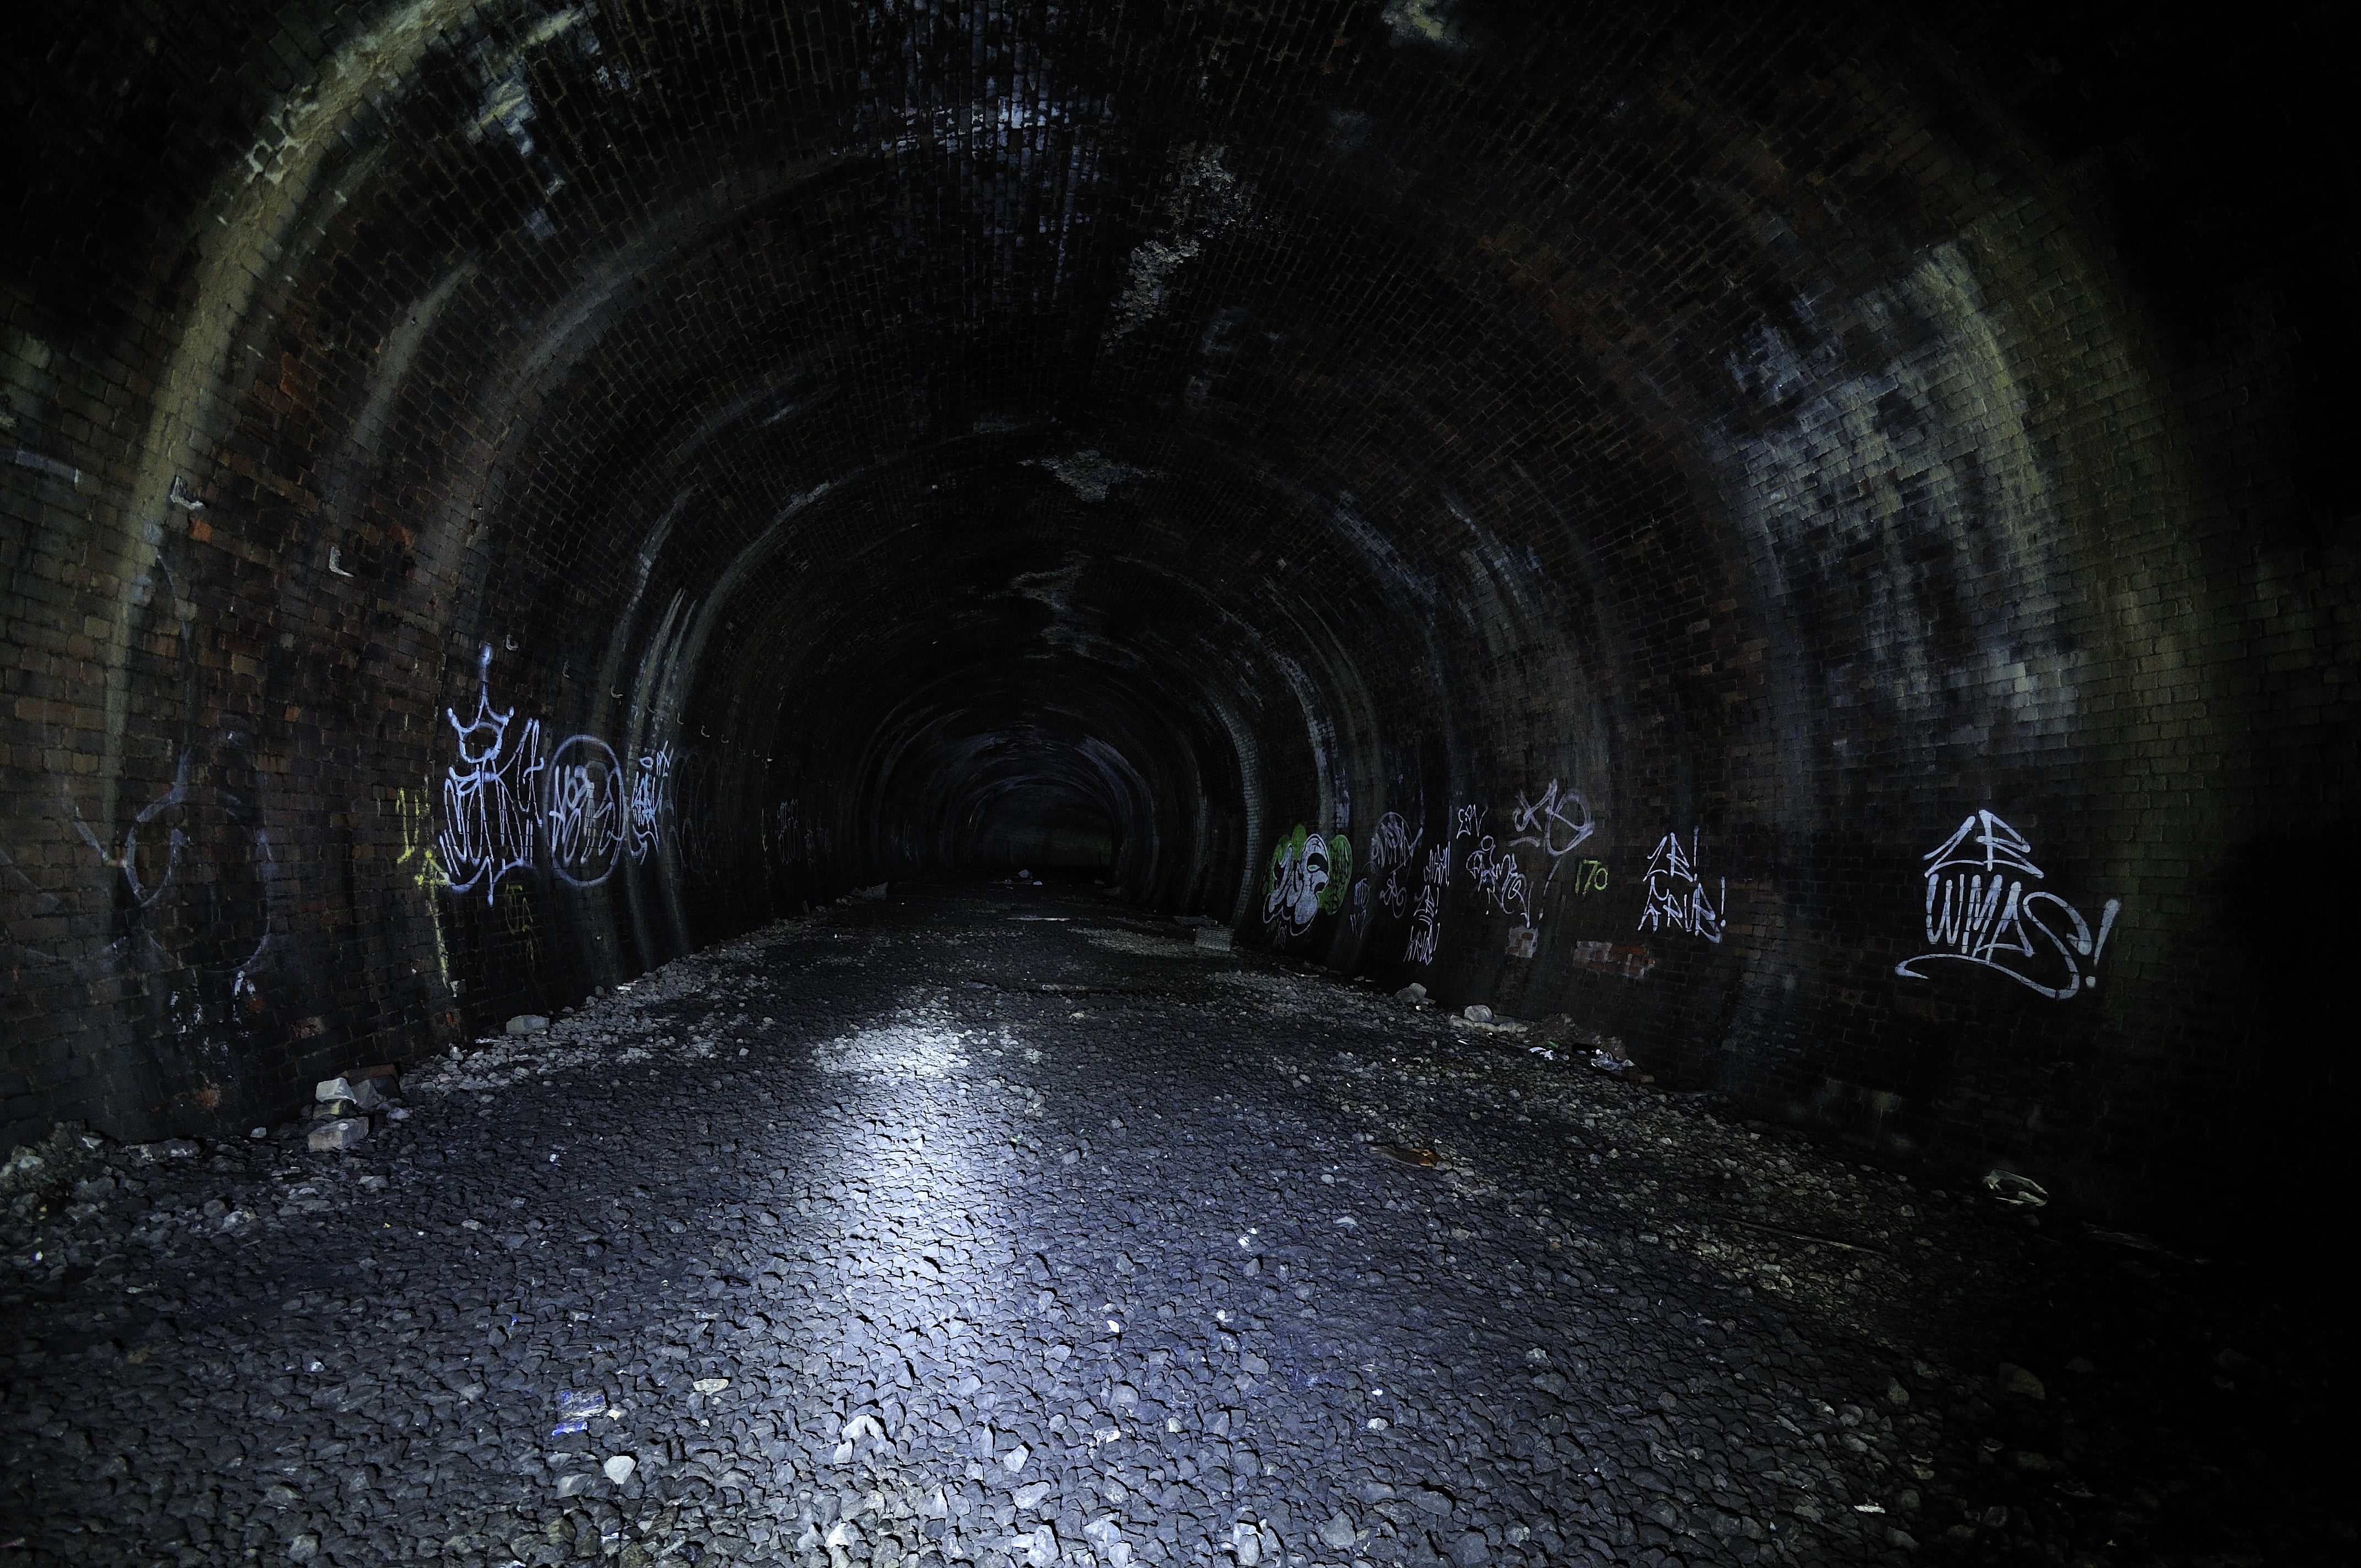 concrete tunnel, dark, night, graffiti, the way forward, direction